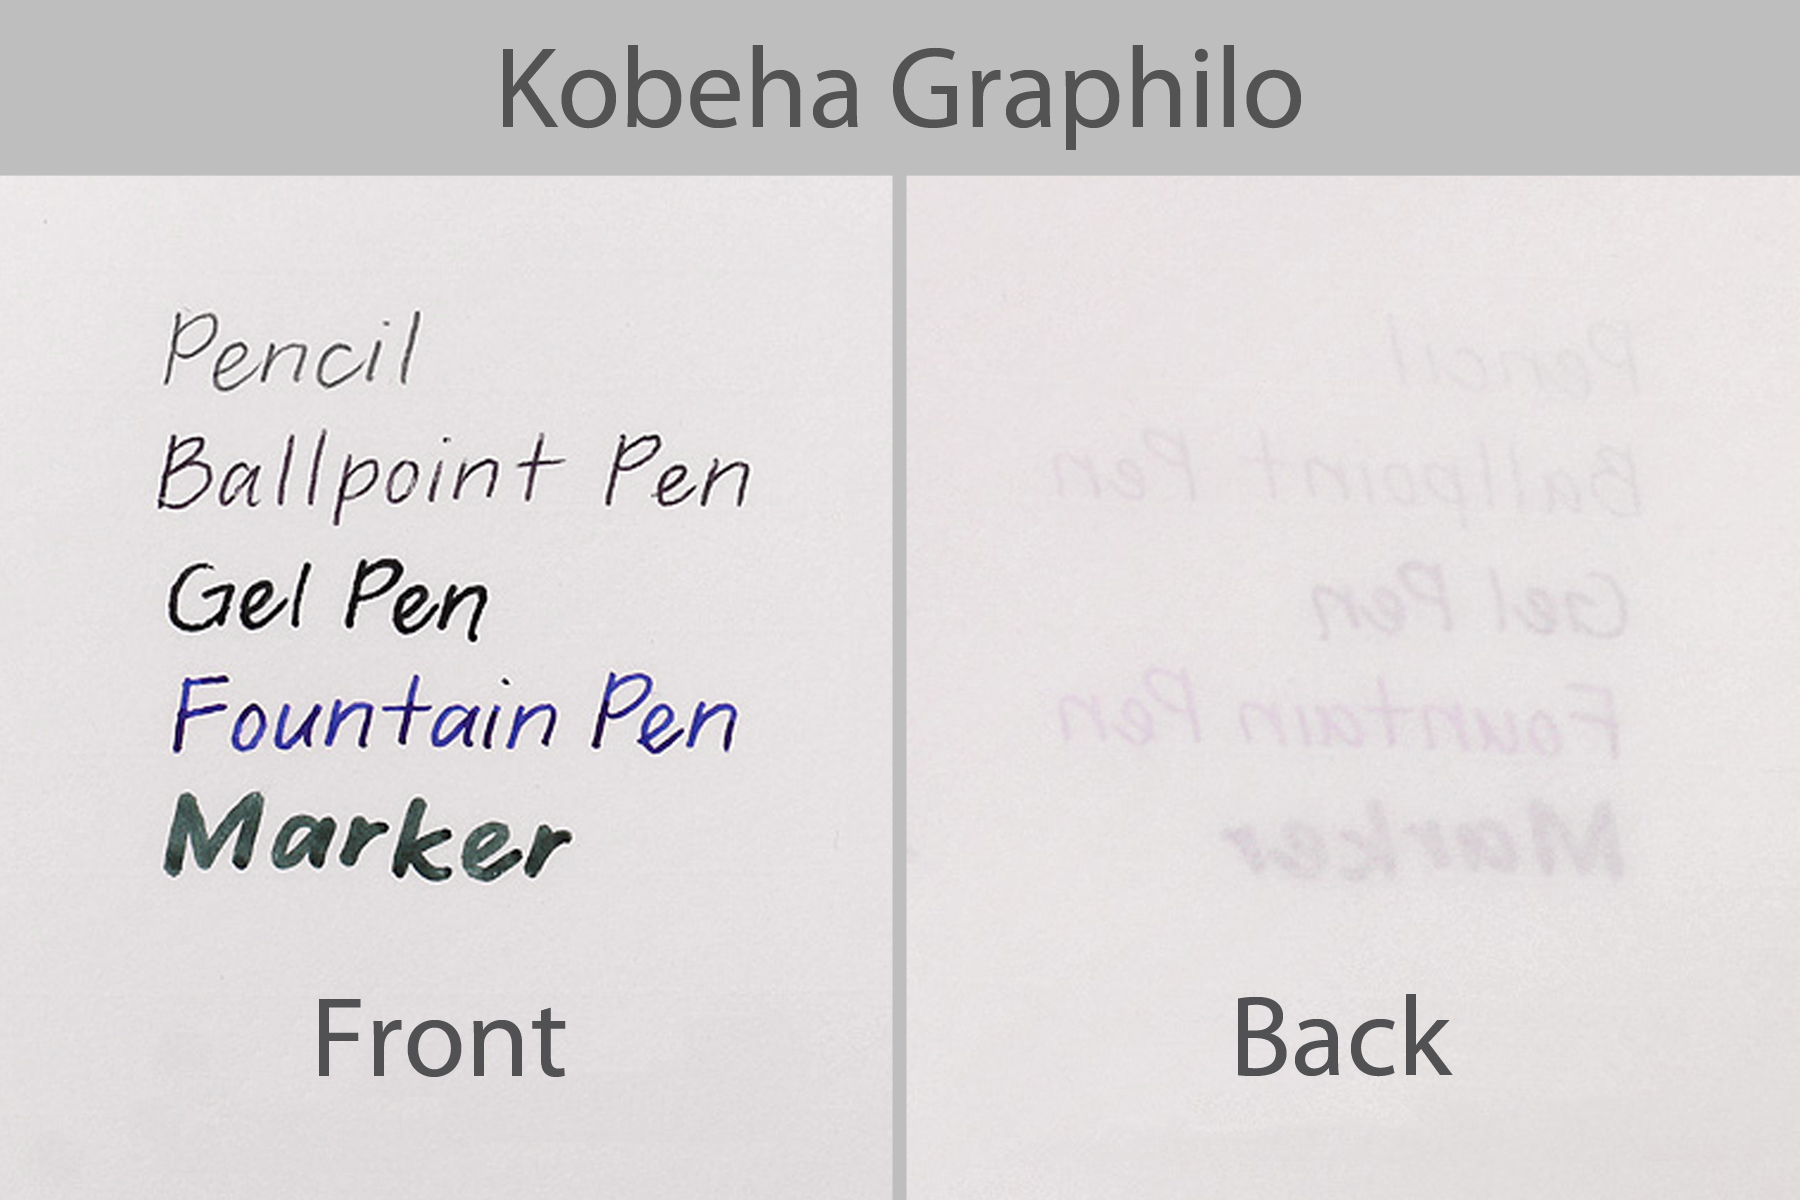 Kobeha Graphilo writing sample.